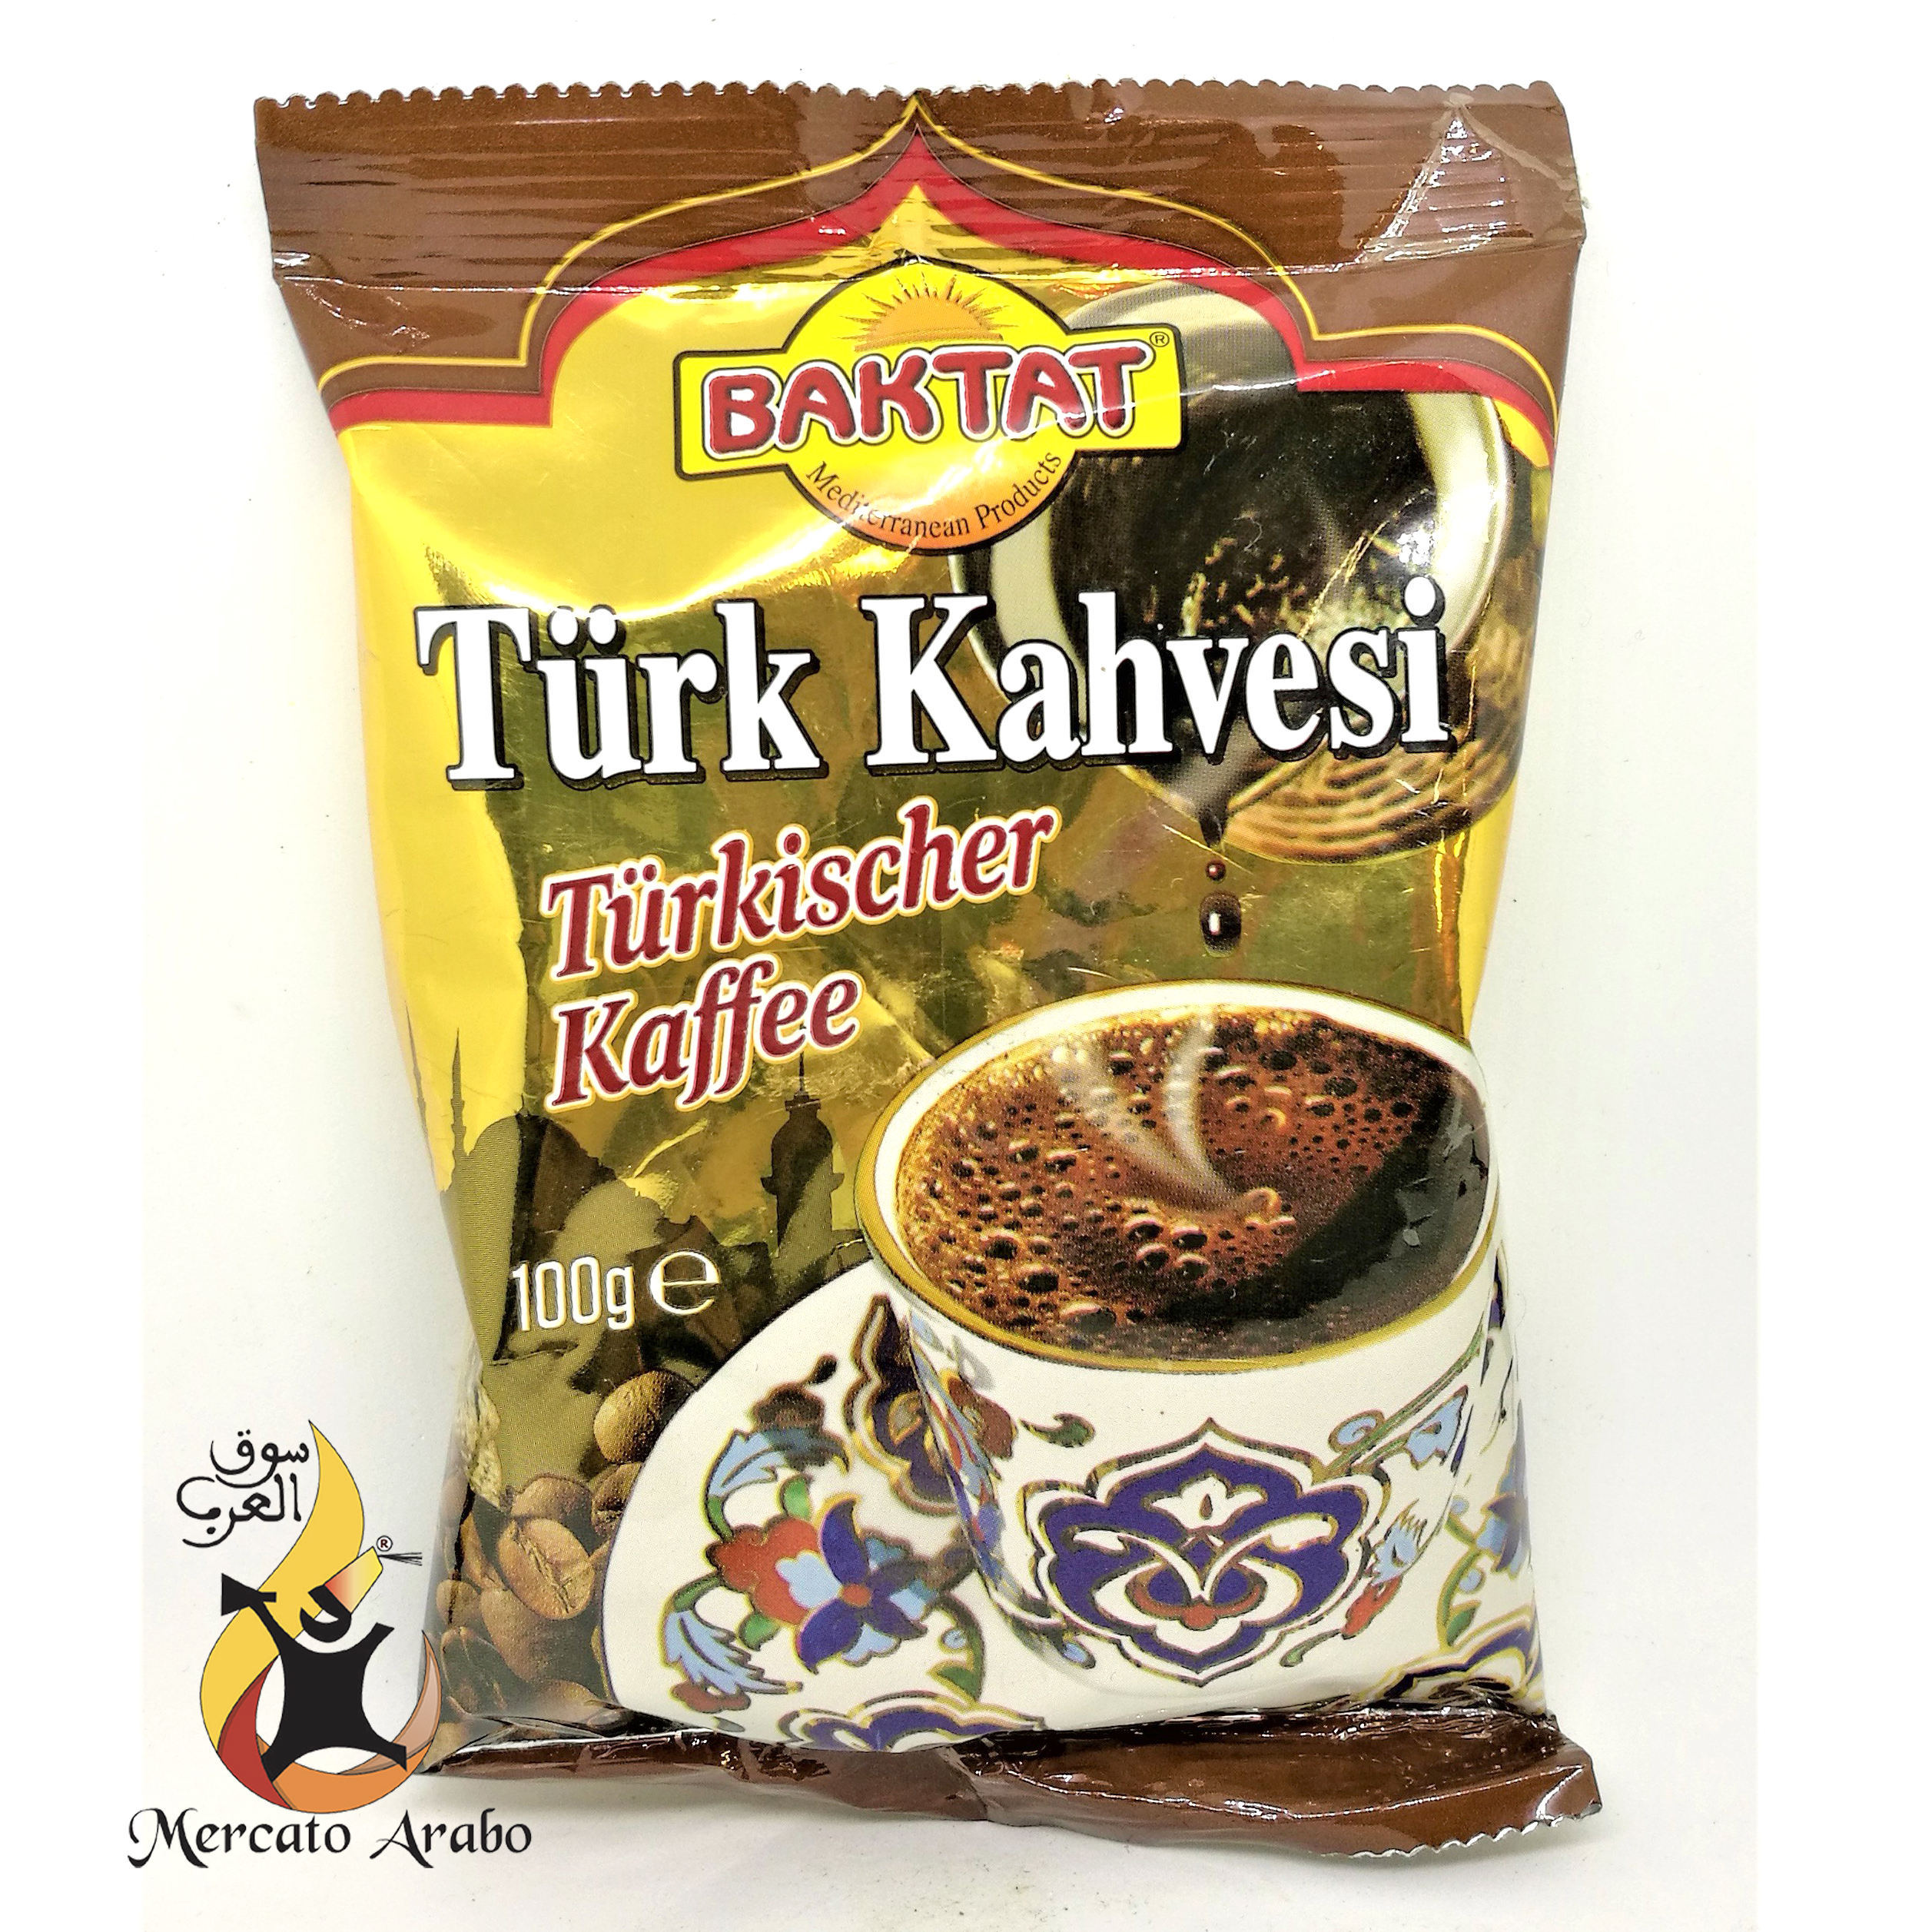 Baktat, caffè turco 100g